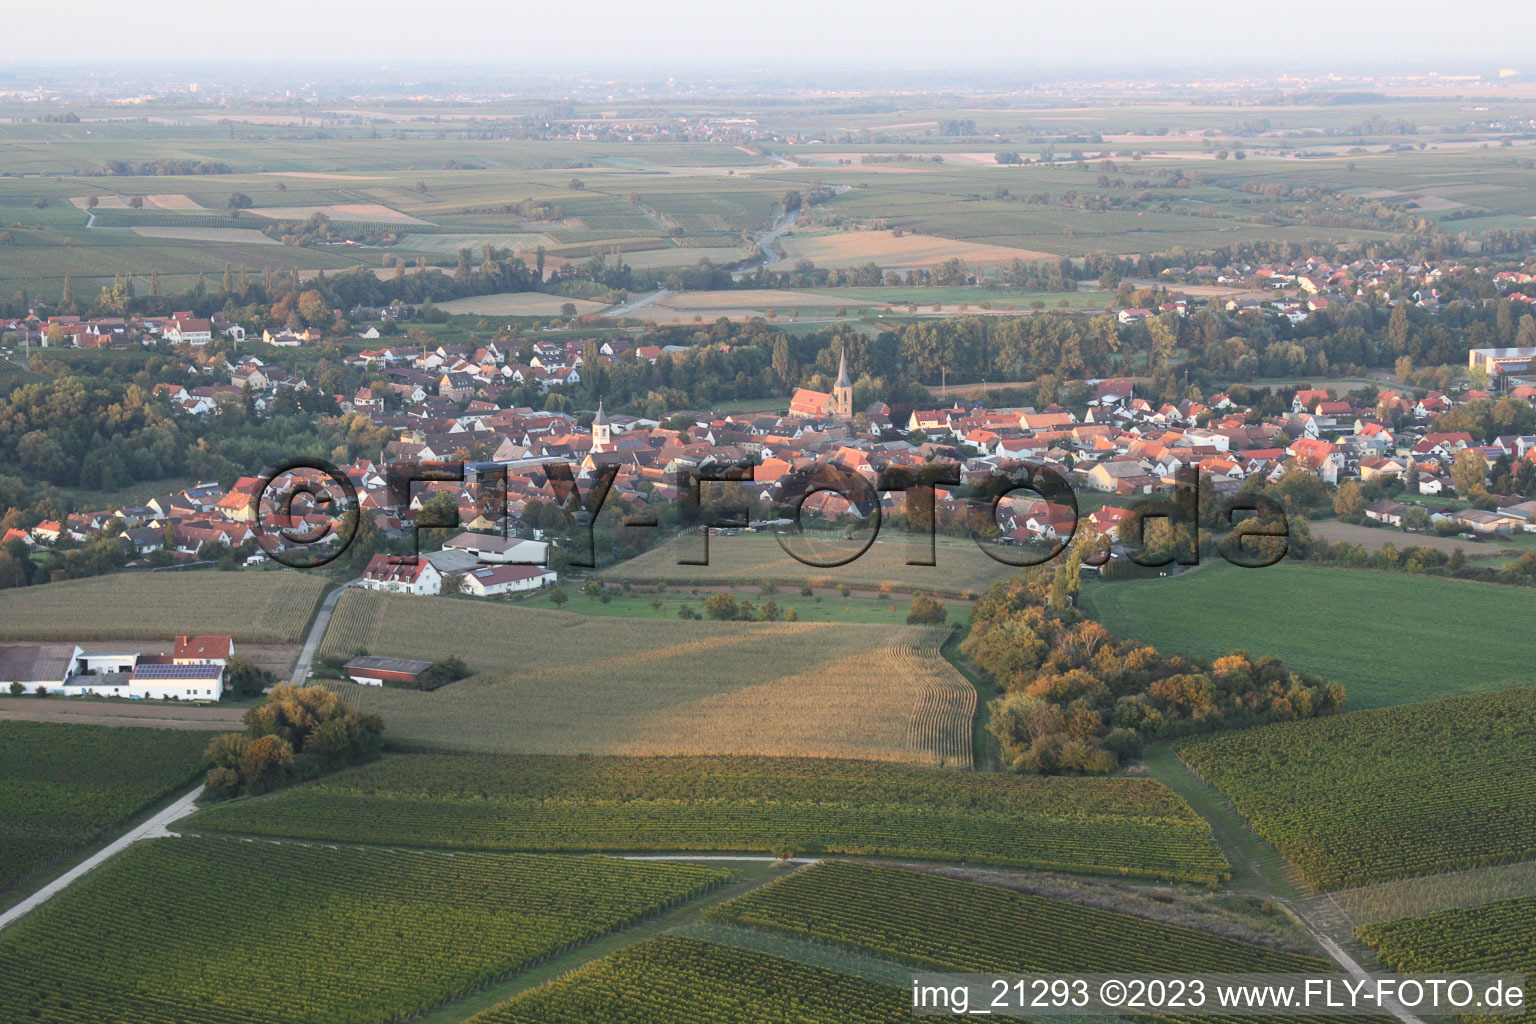 District Ingenheim in Billigheim-Ingenheim in the state Rhineland-Palatinate, Germany from a drone